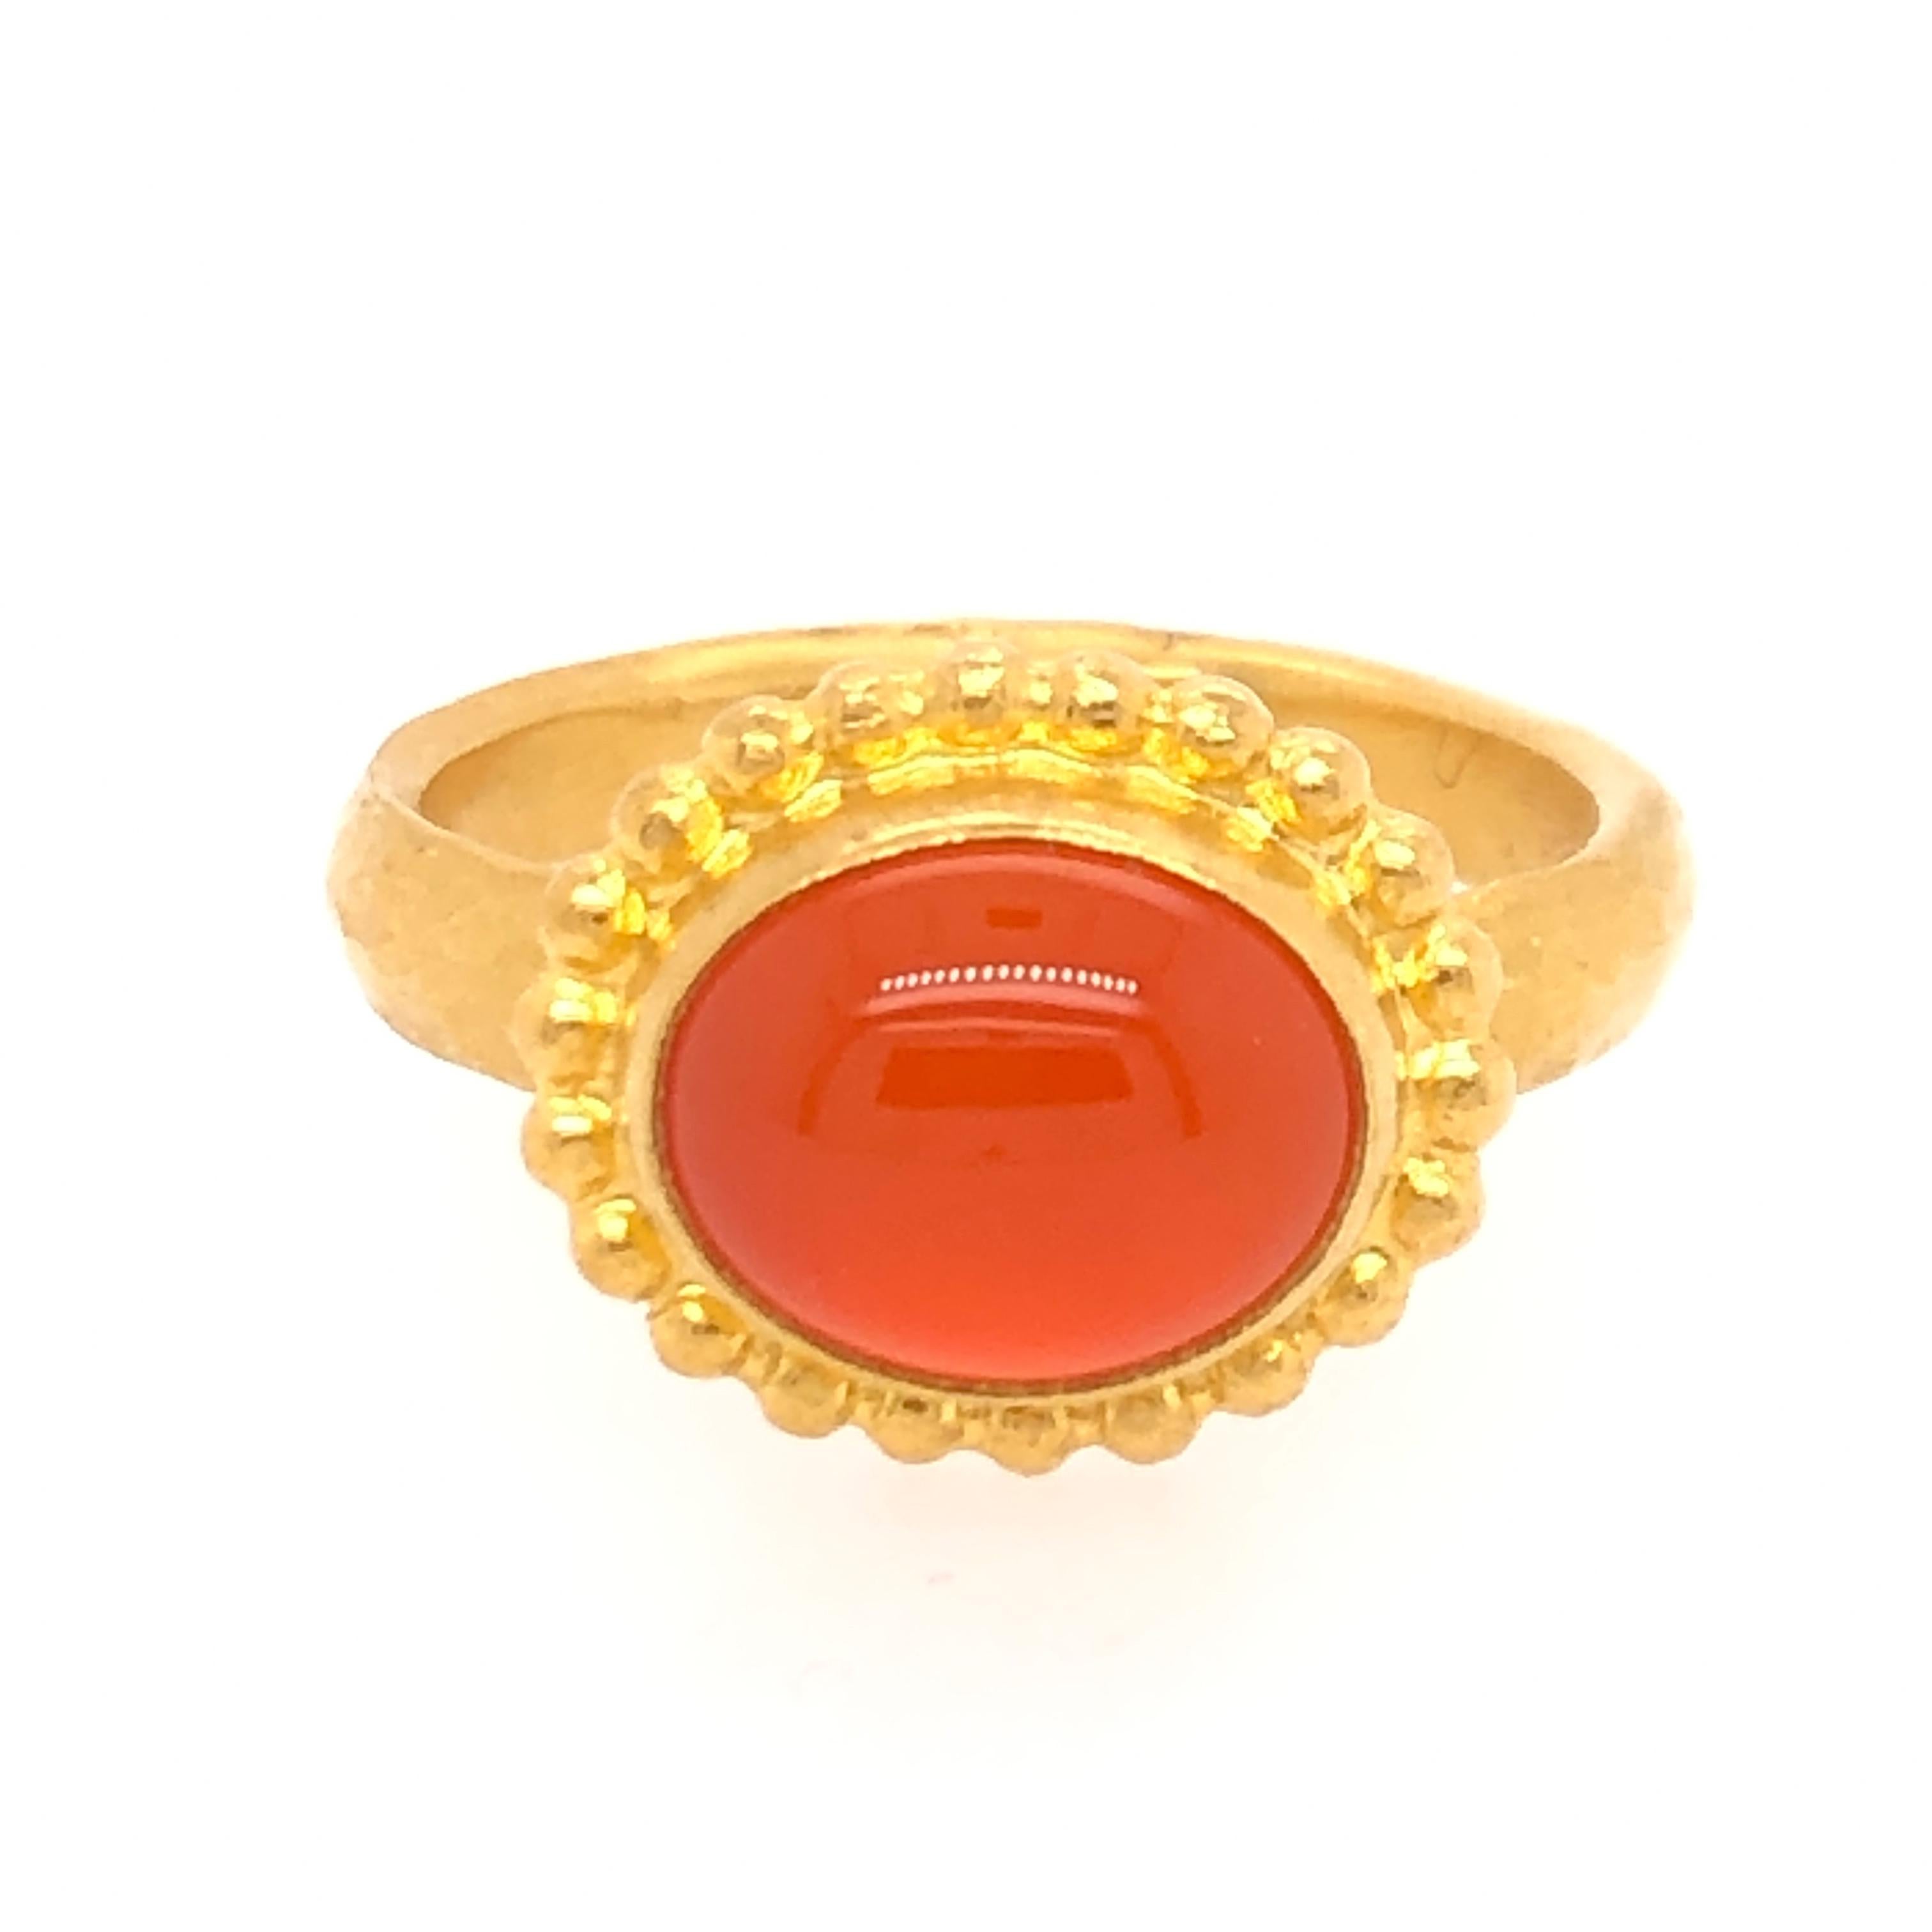 Gurhan 24K yellow gold fire opal ring. Cabochon 

Size: 6

Stamped: RQ093/0.990, GURHAN